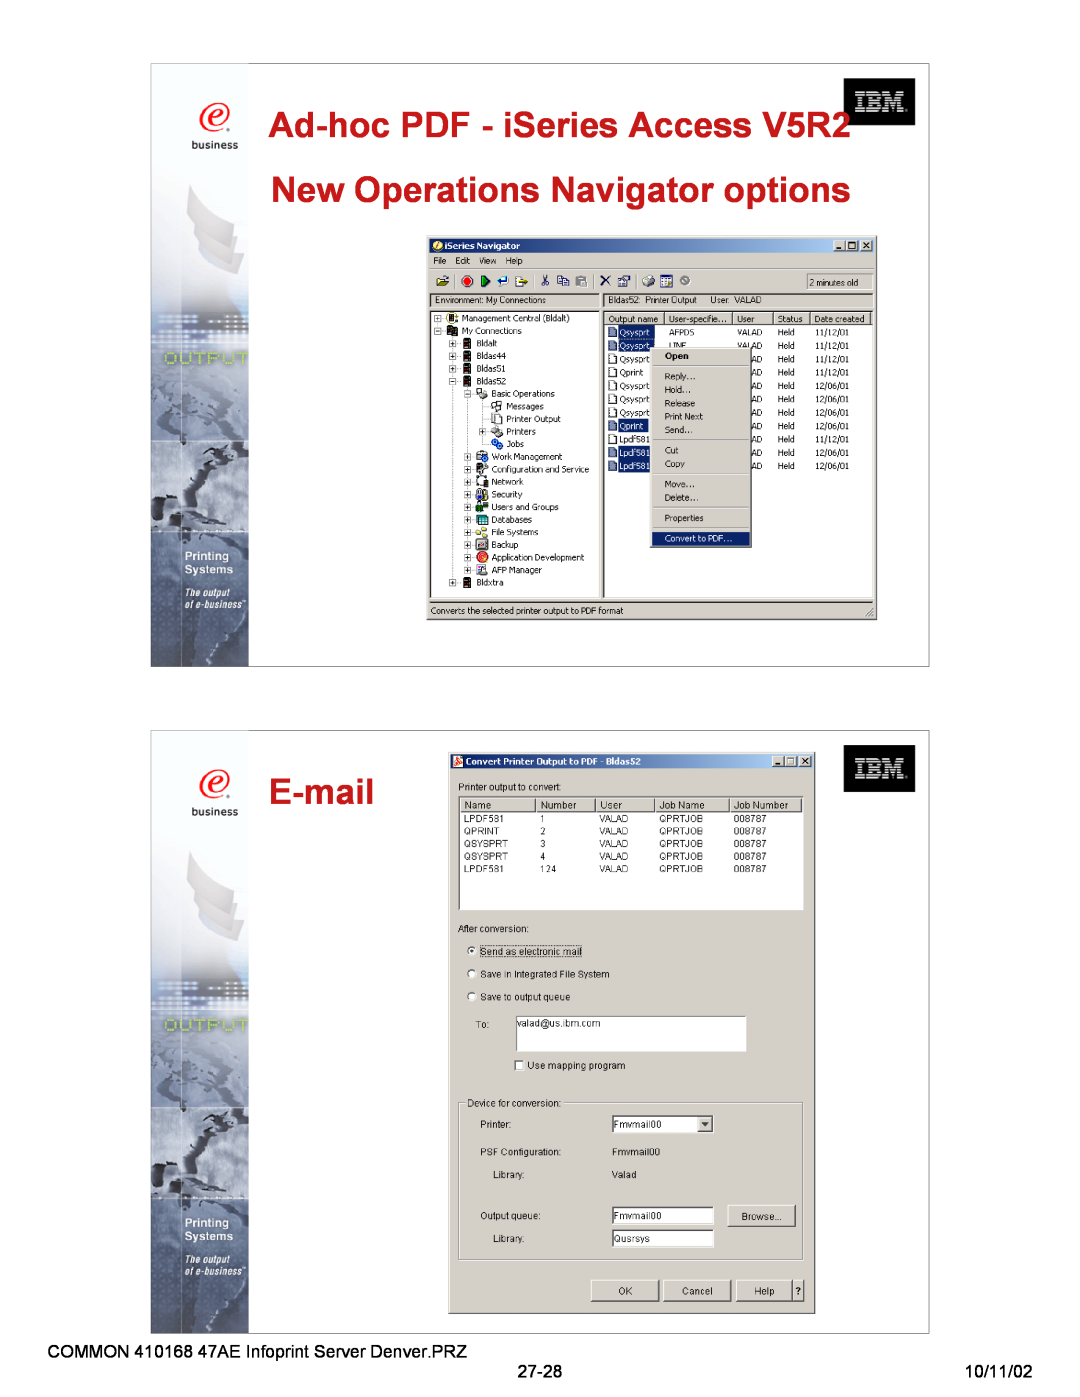 IBM 47AE - 410168 manual Ad-hoc PDF - iSeries Access V5R2 New Operations Navigator options, E-mail, 27-28, 10/11/02 